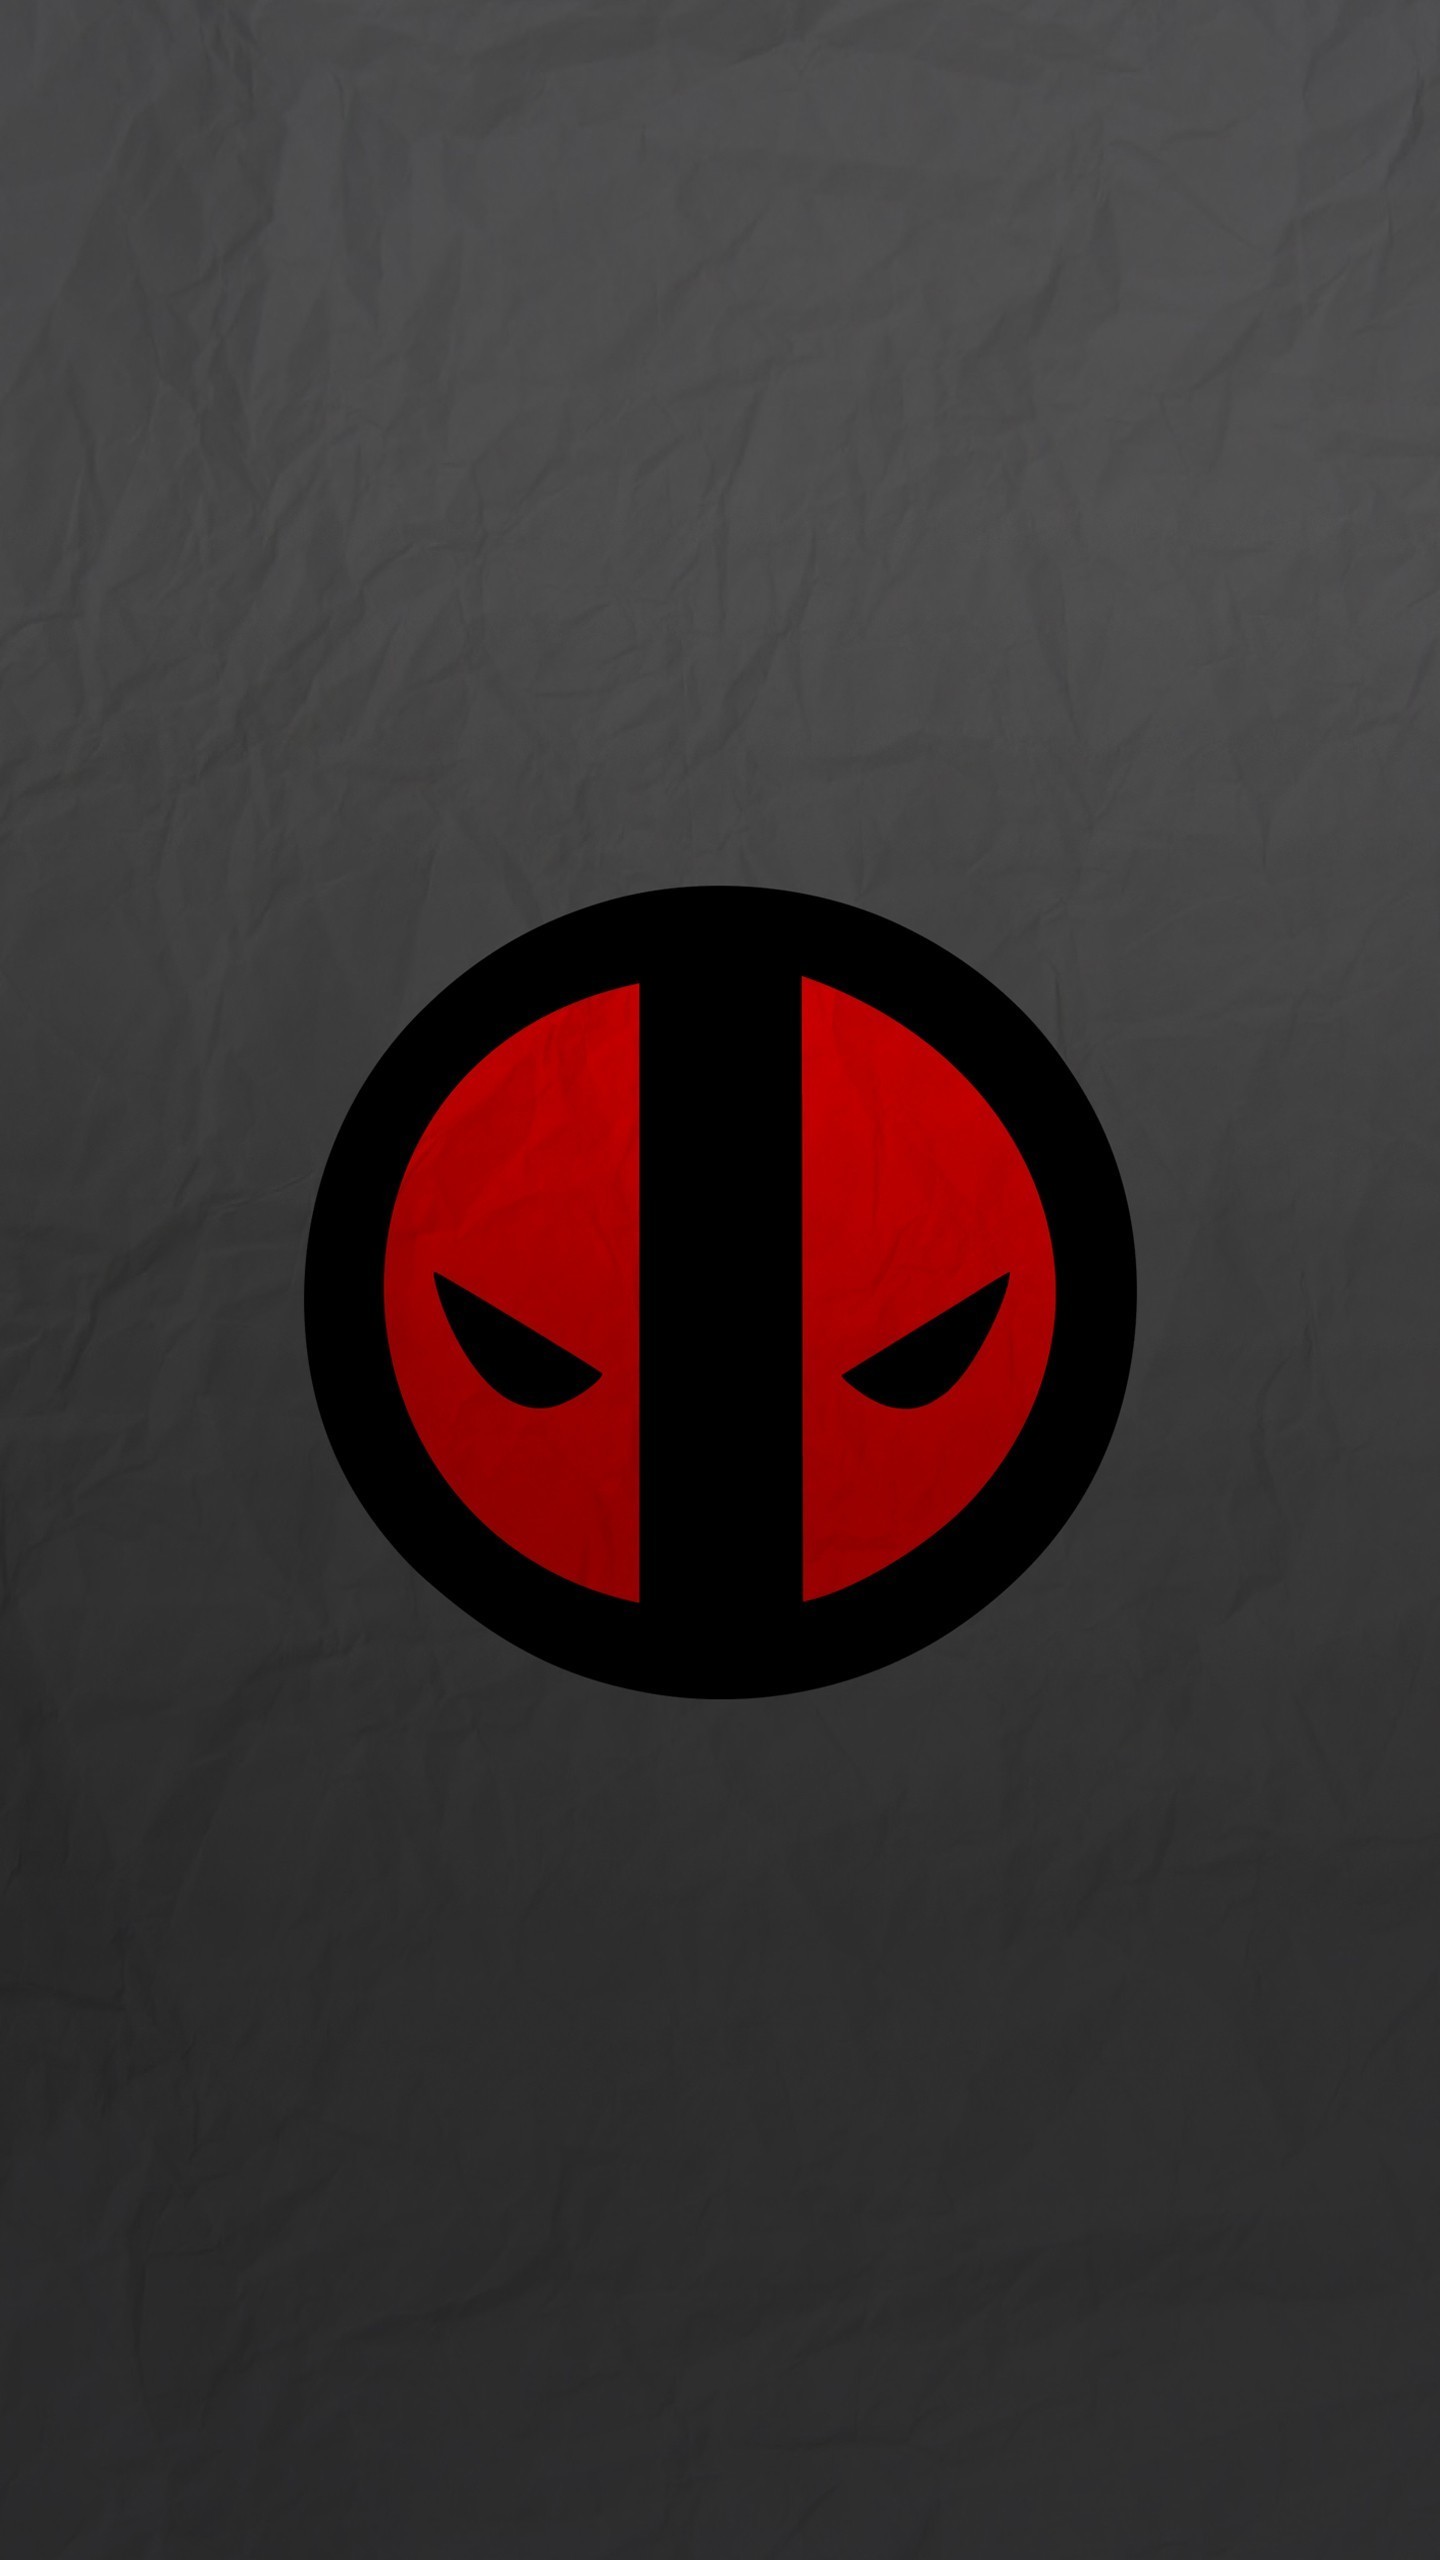 1440x2560 1920x1080 Daredevil Symbol by Yurtigo Daredevil Symbol by Yurtigo